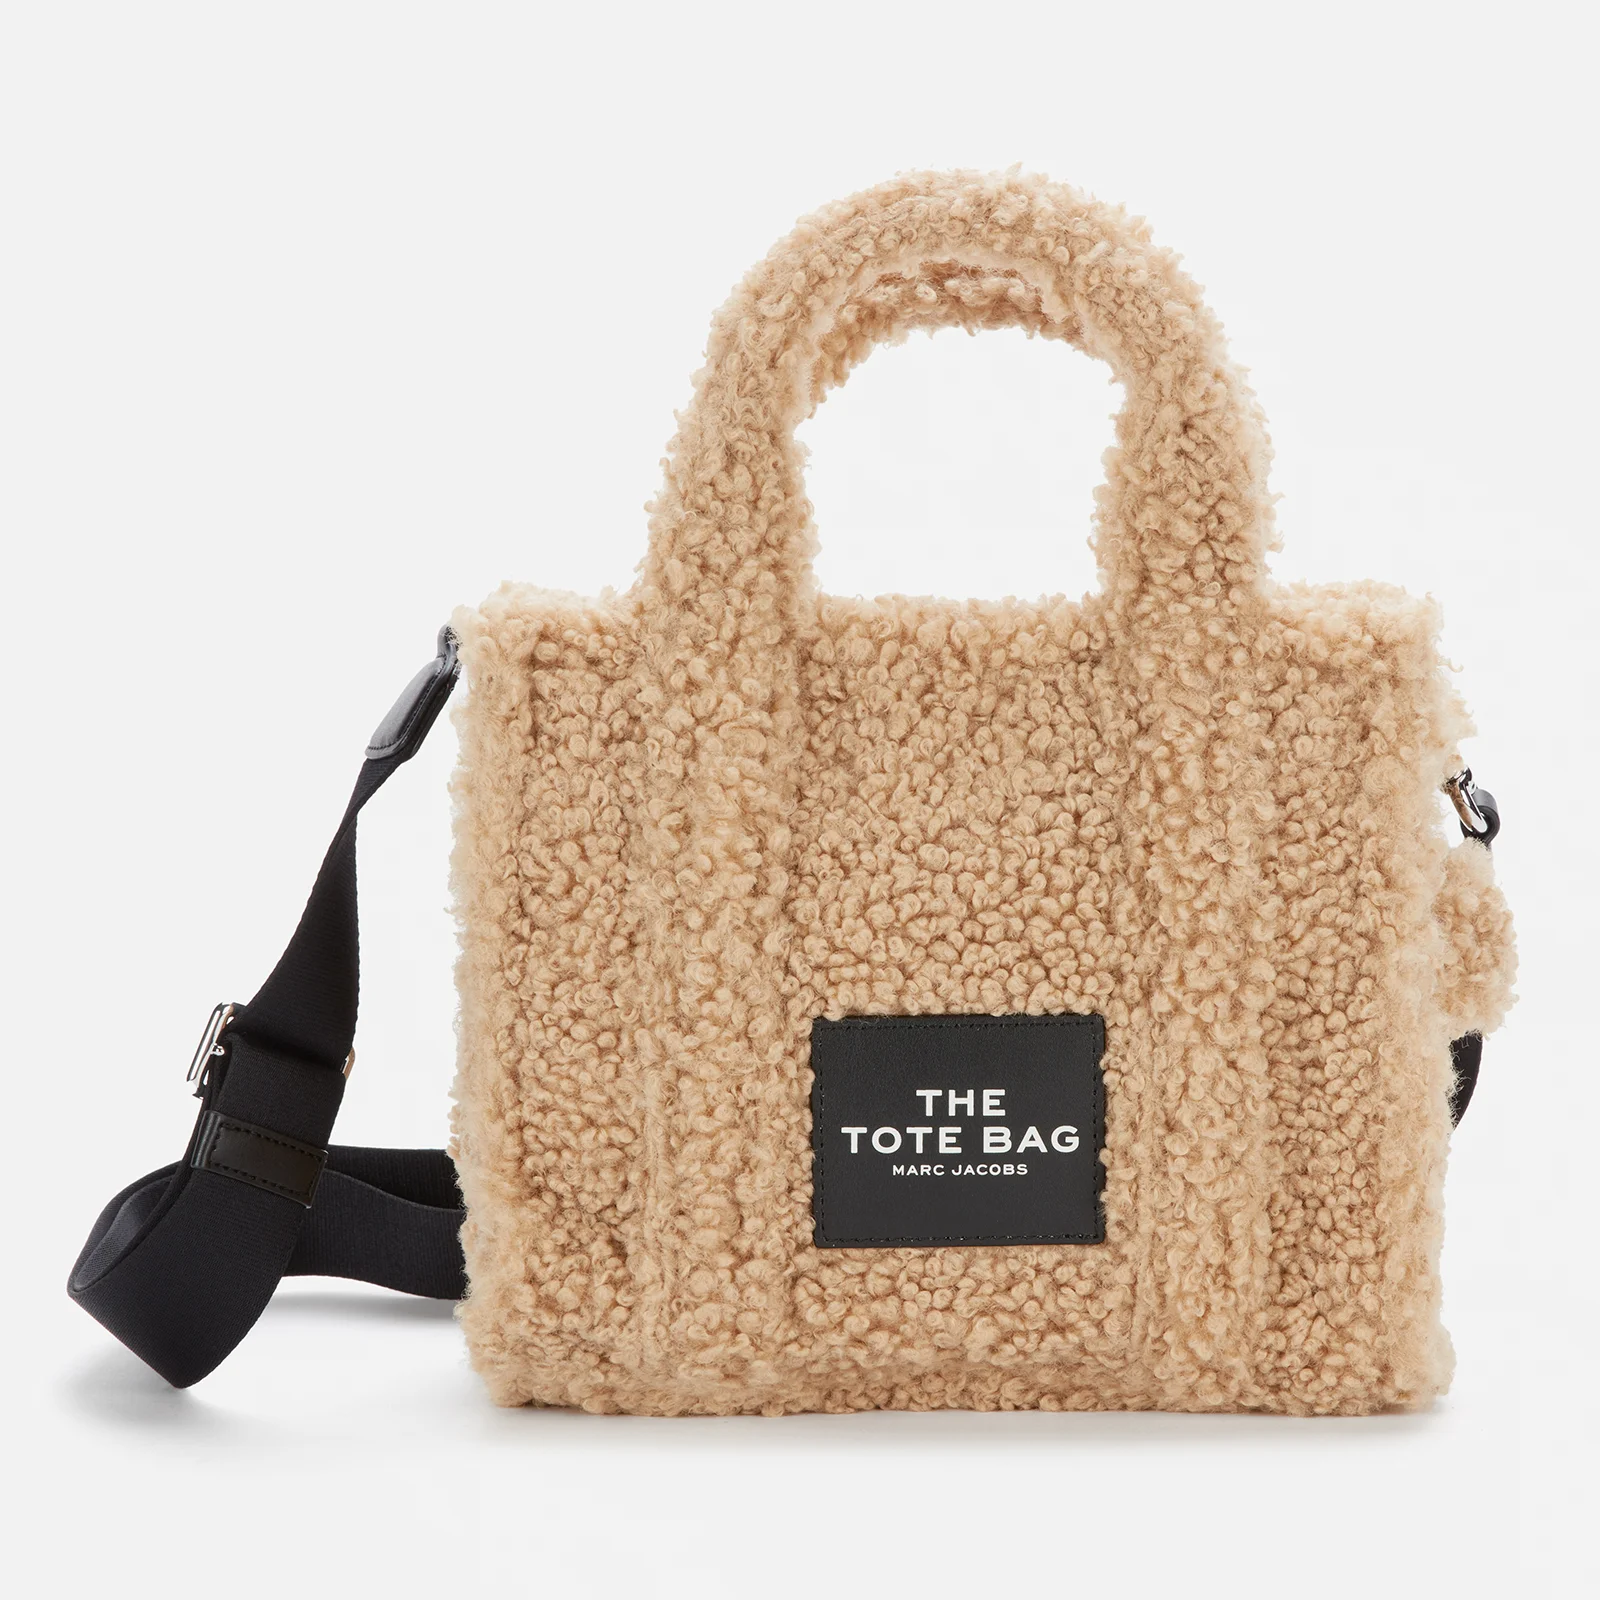 Marc Jacobs Women's The Mini Teddy Tote Bag - Beige Image 1